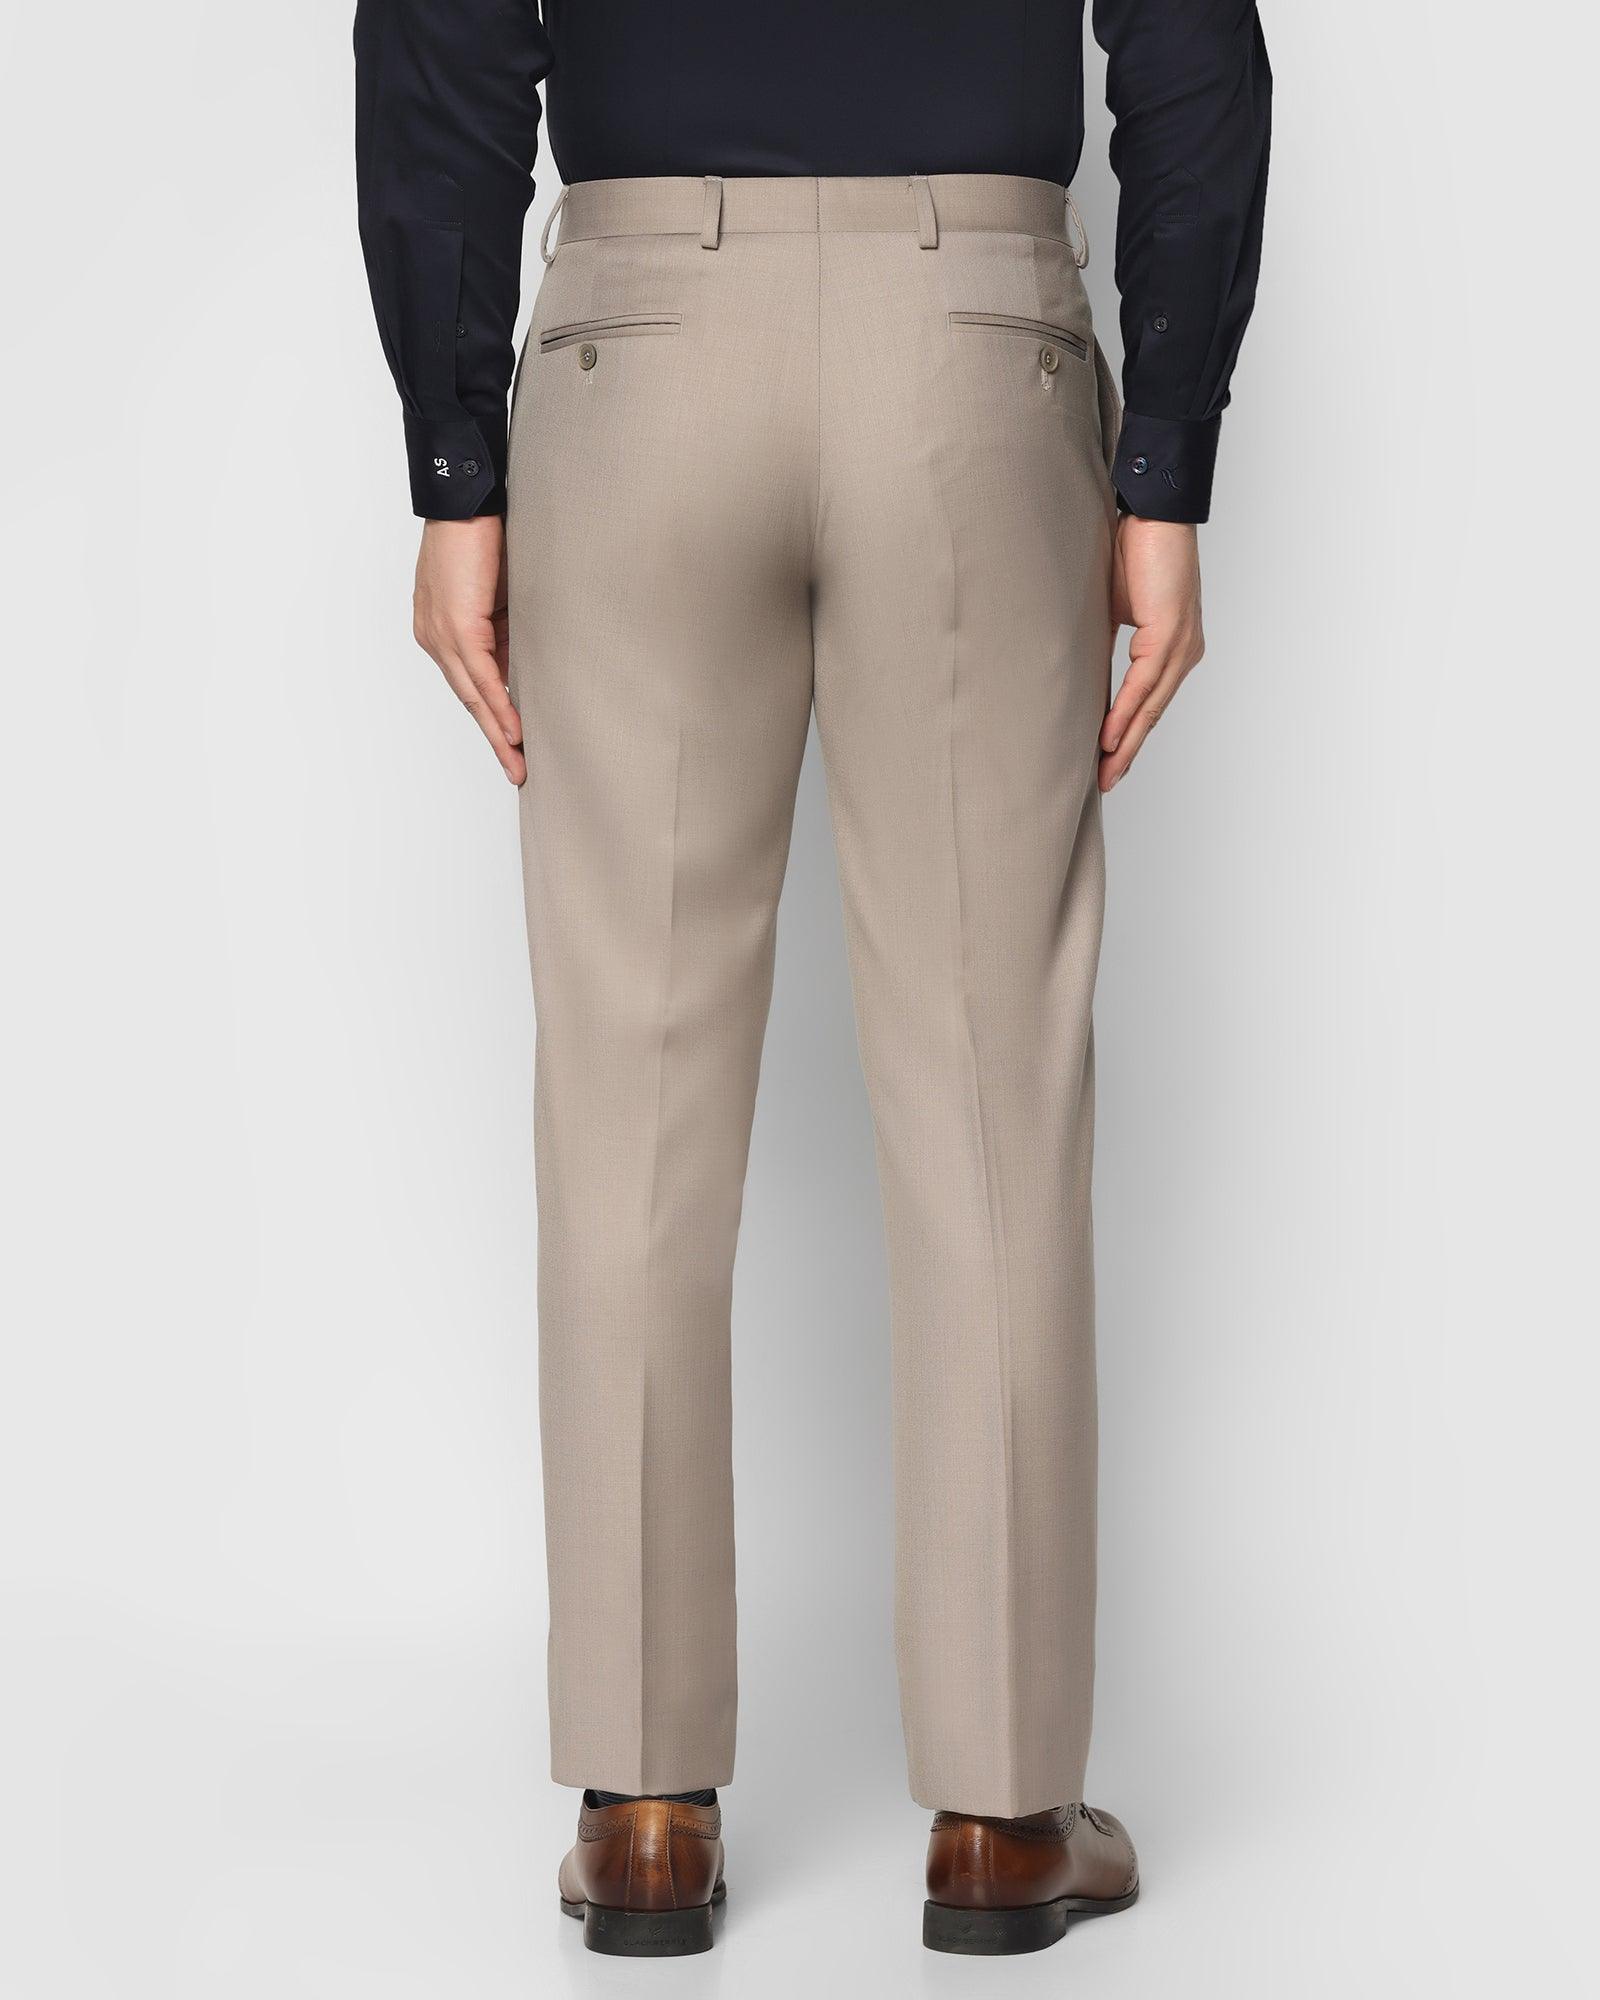 Fashion Khaki Trousers For Men @ Best Price Online | Jumia Kenya